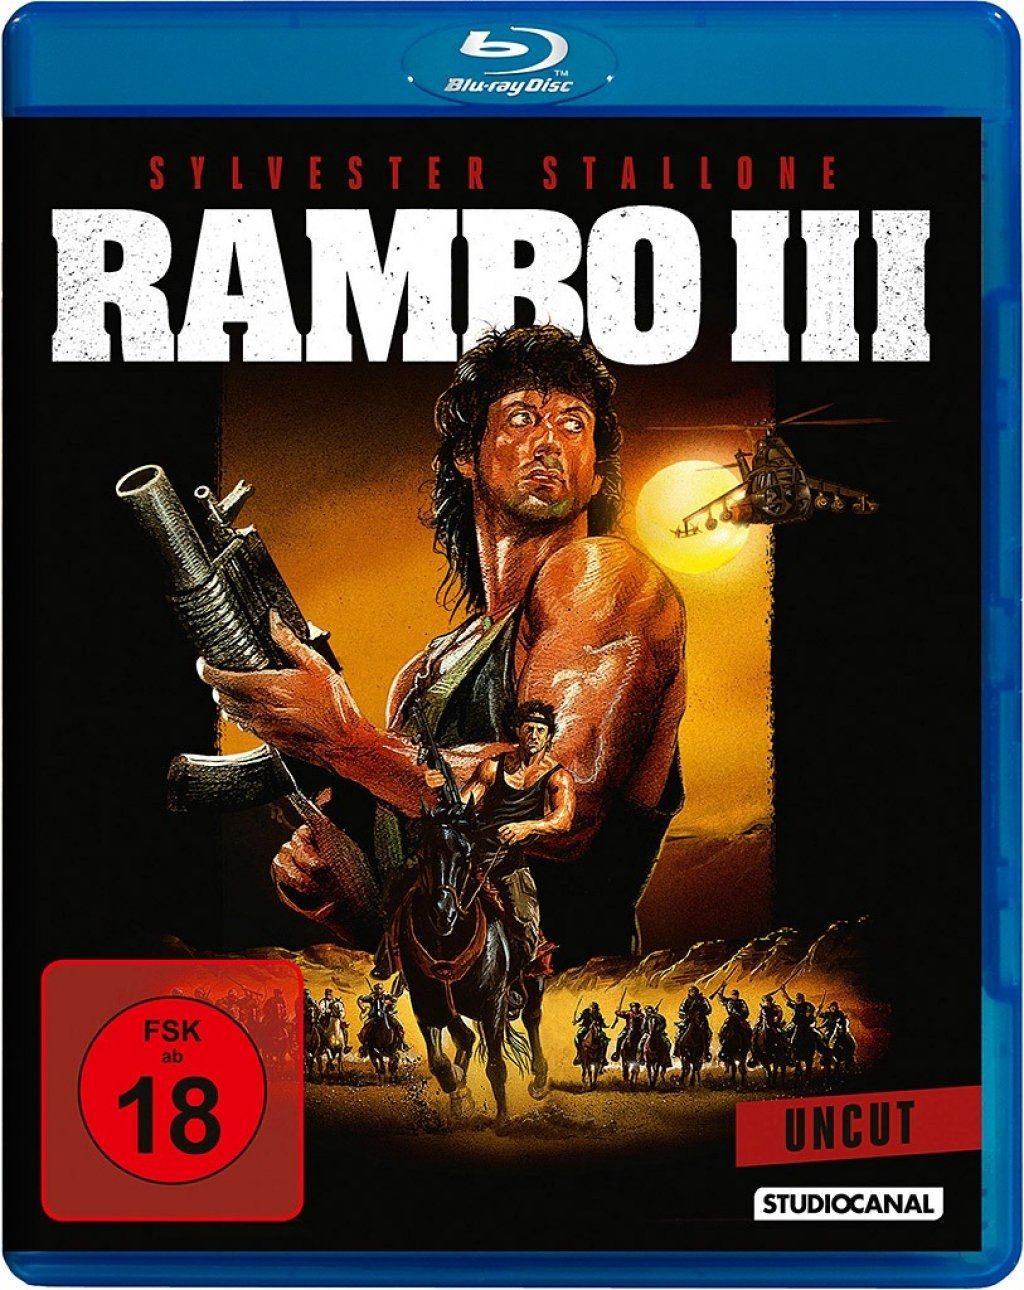 Rambo III (Uncut) (BLURAY)